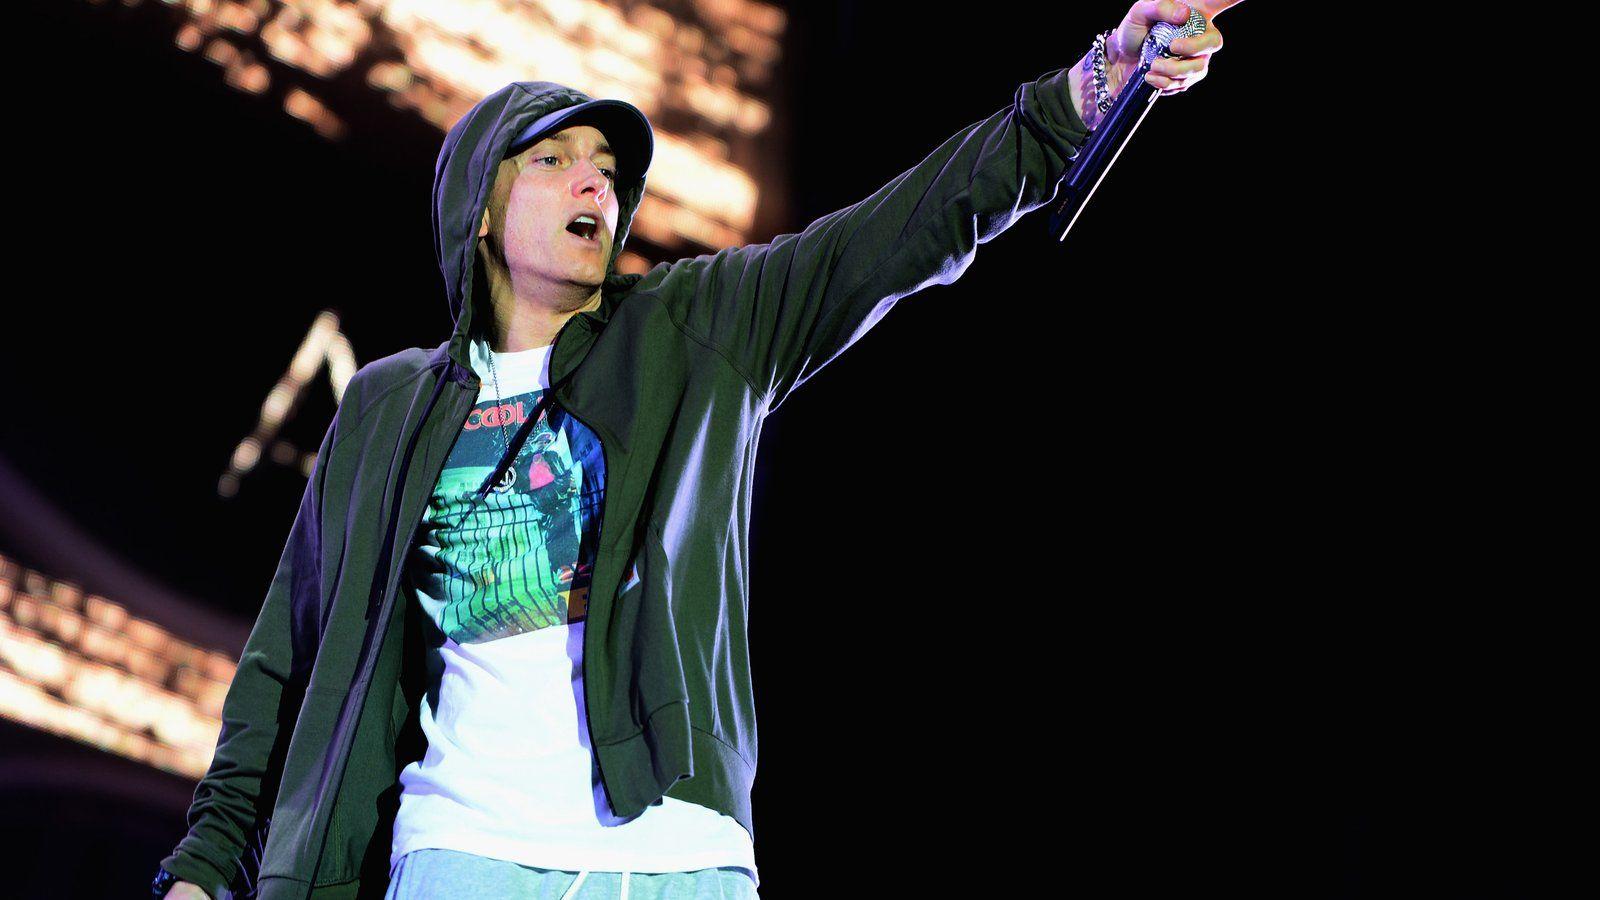 Eminem sends fans into a frenzy with surprise album